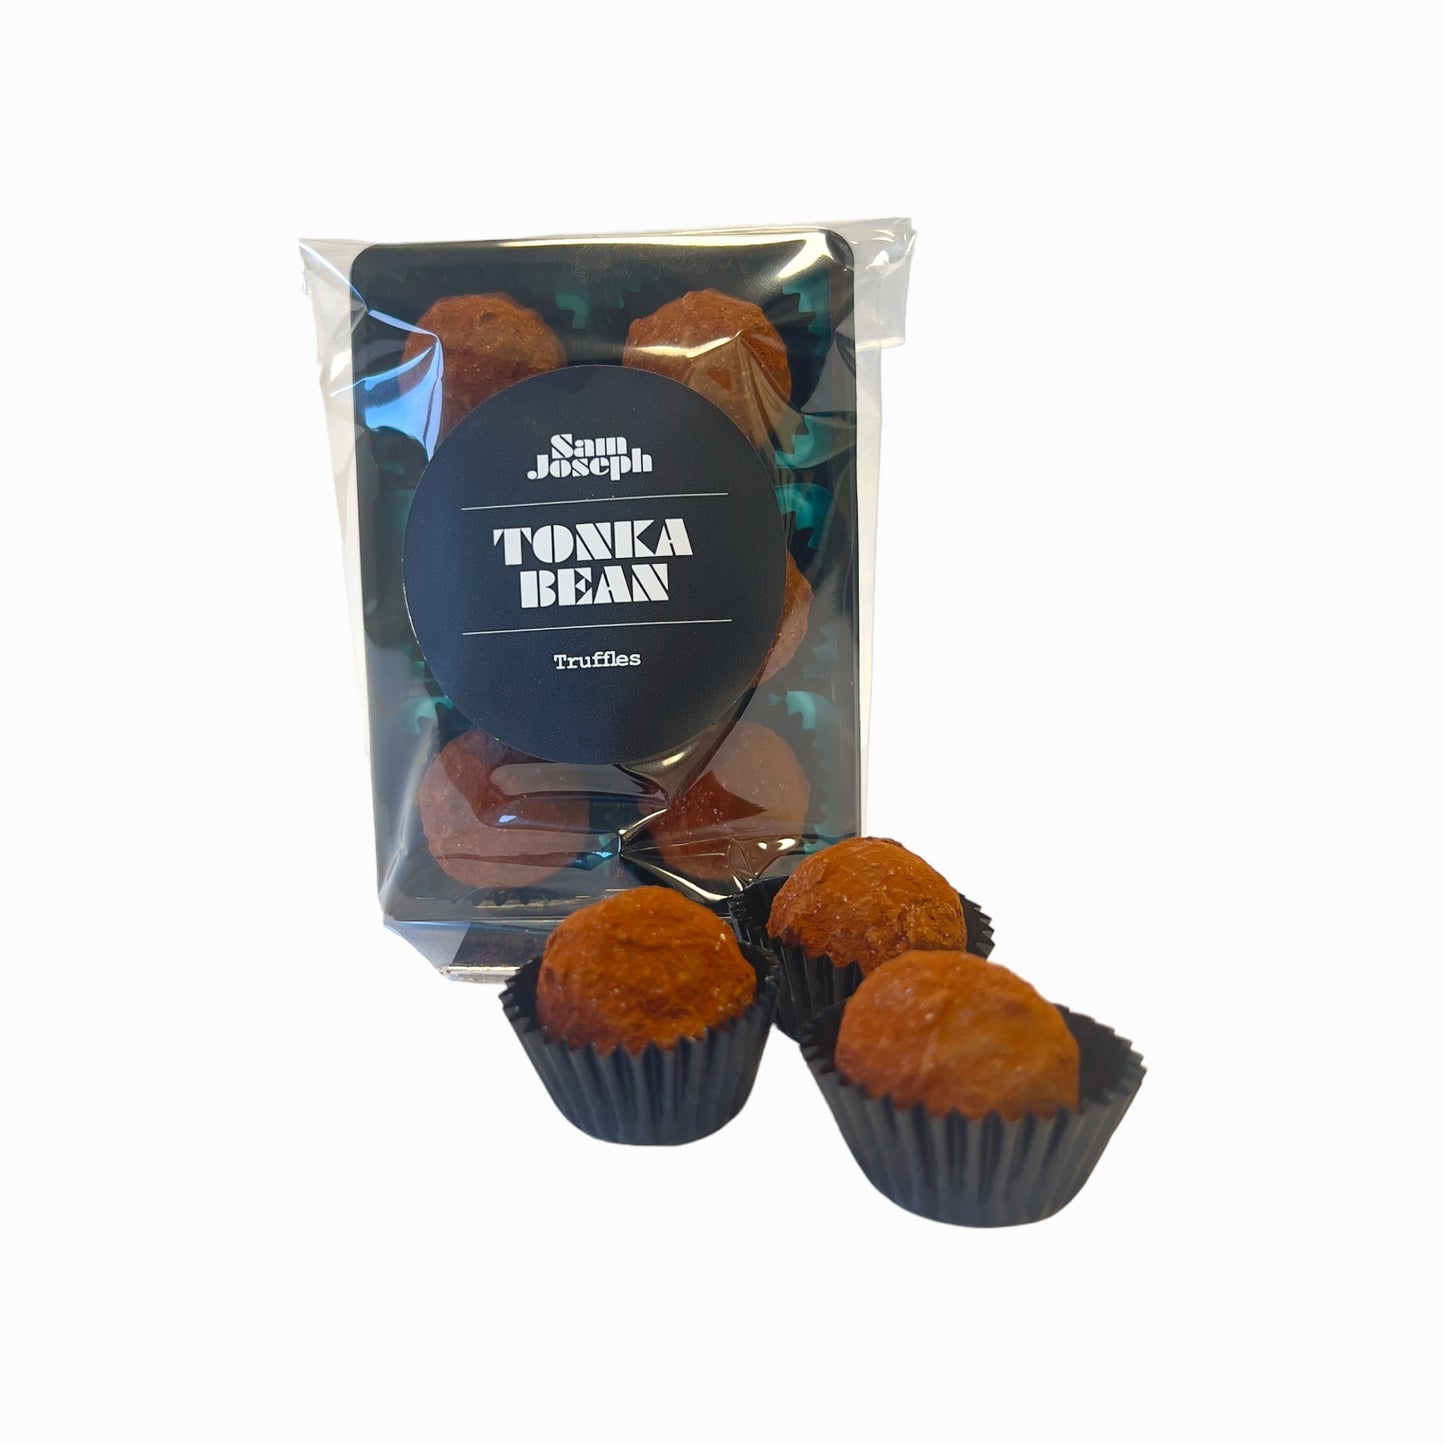 Tonka bean truffle - Sam Joseph chocolates